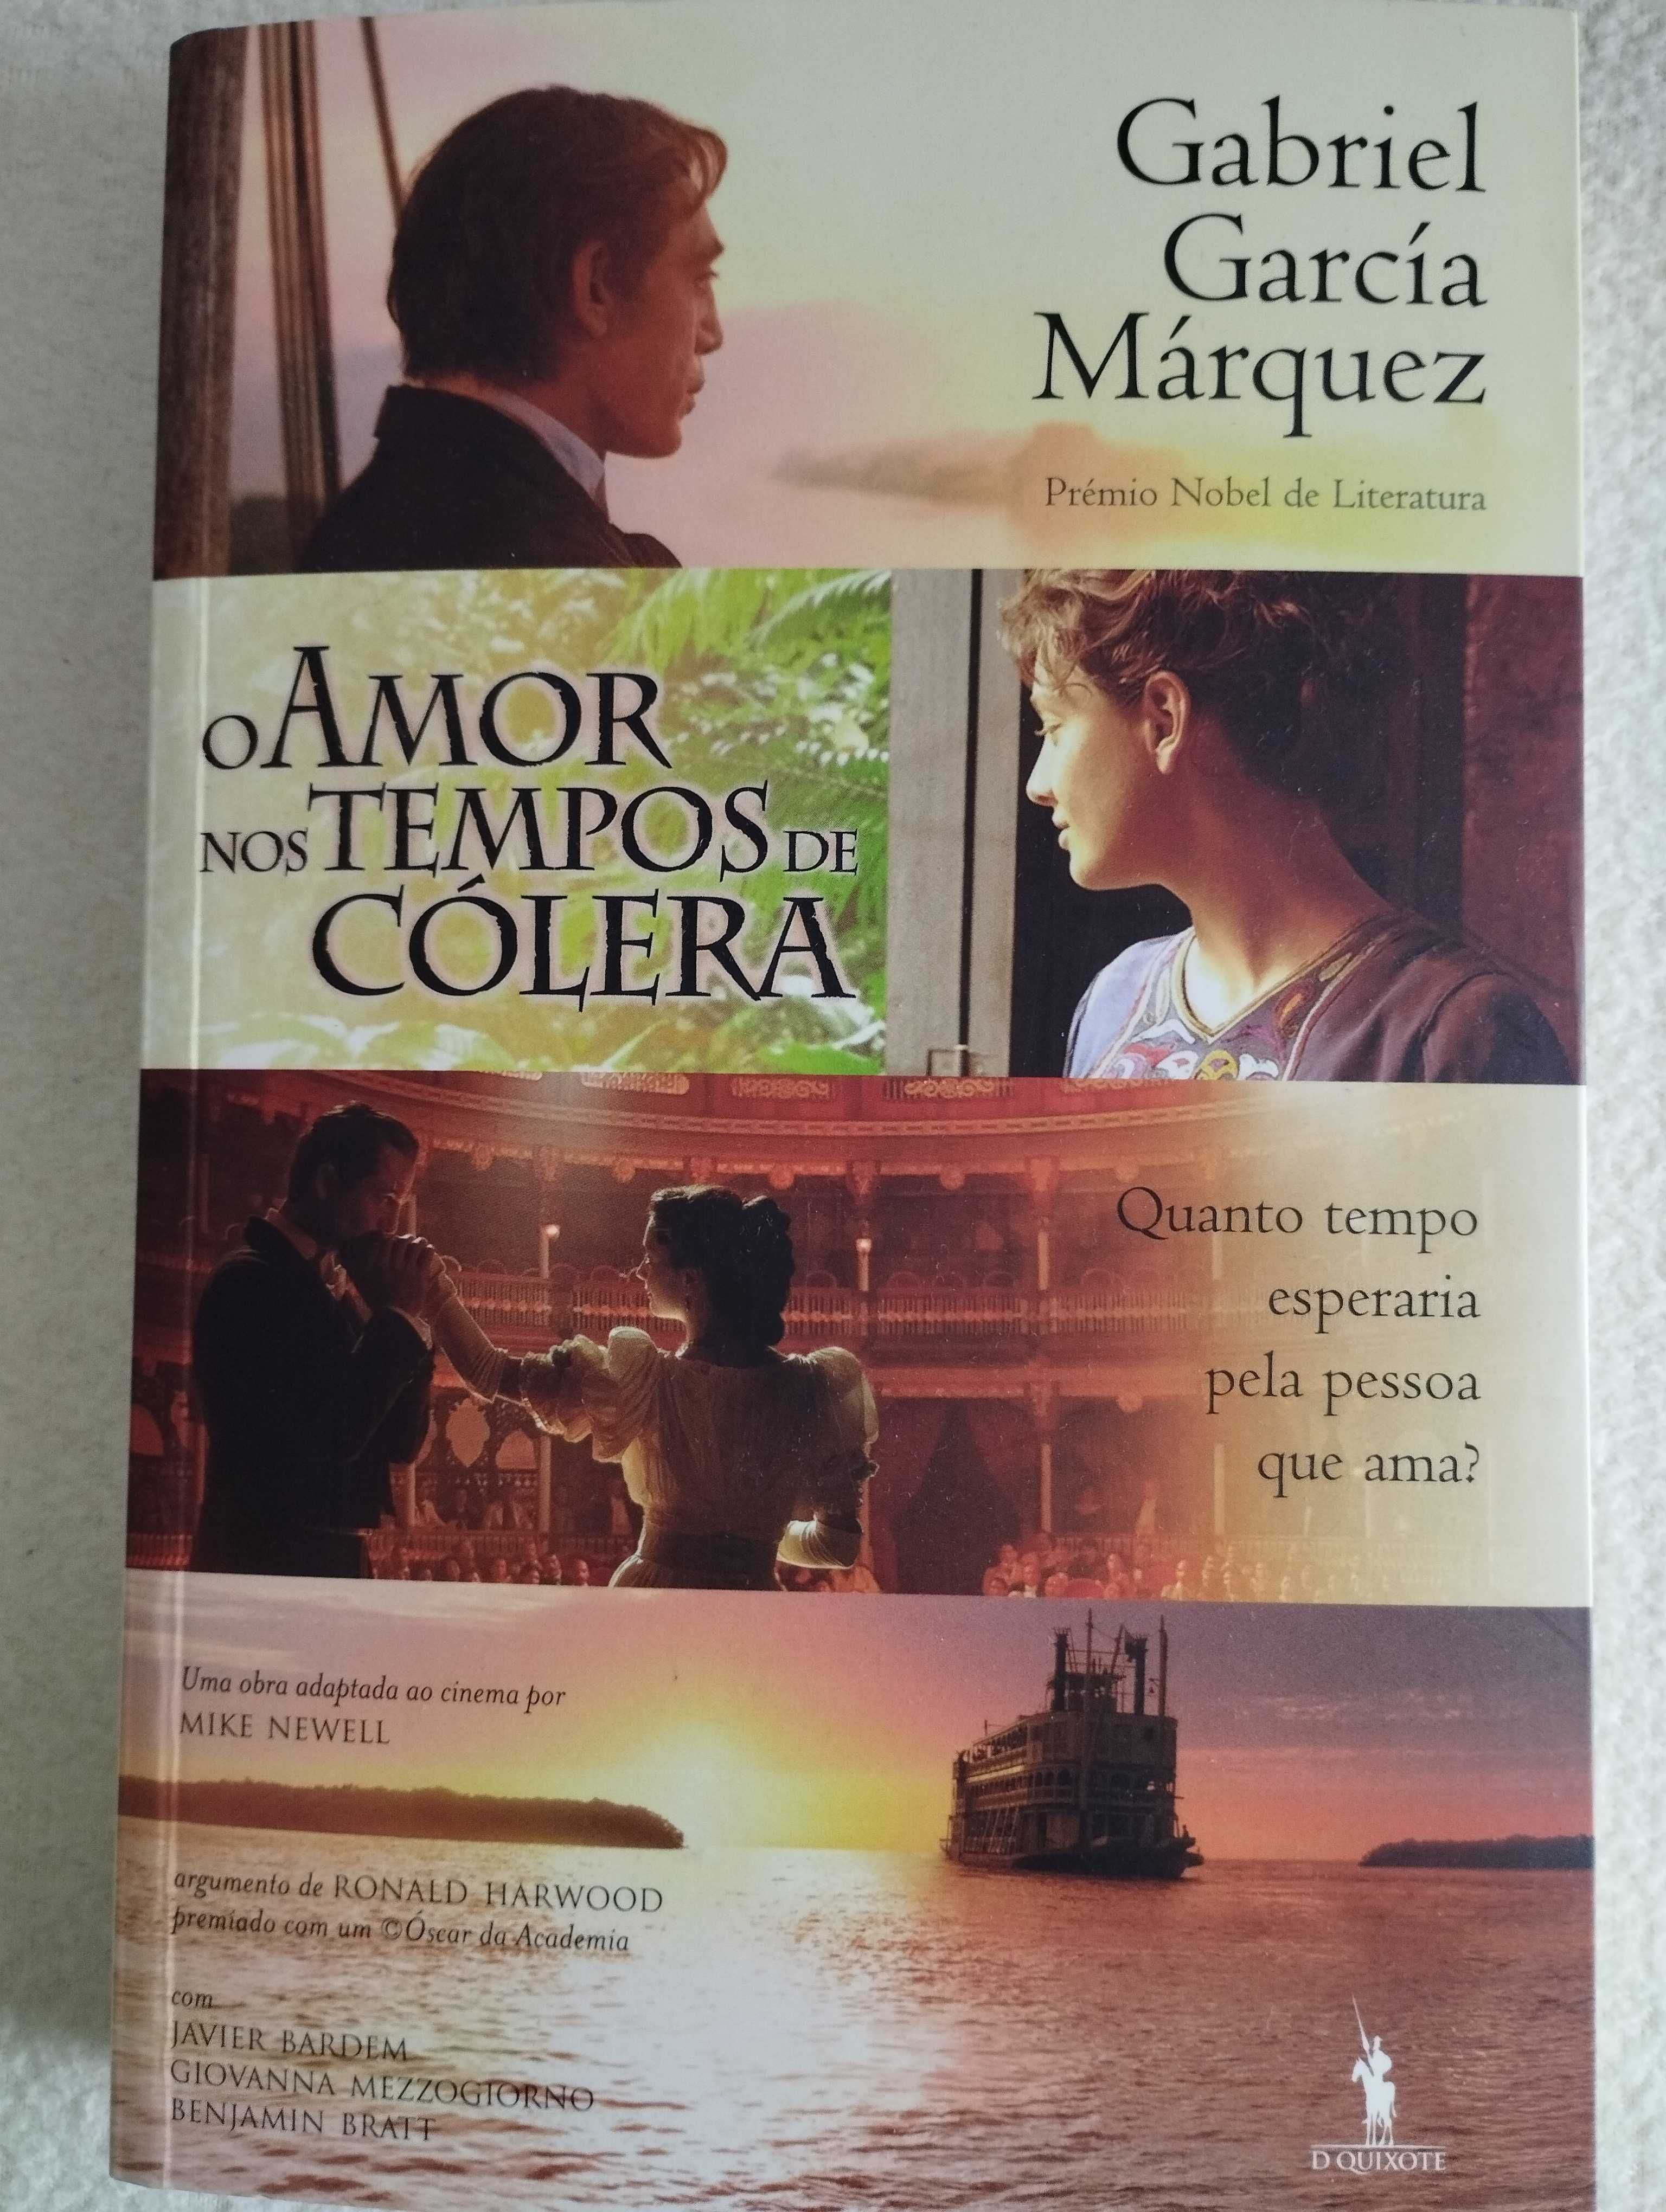 "O Amor nos tempos de cólera" Gabriel Garcia Márquez. Prémio Nobel